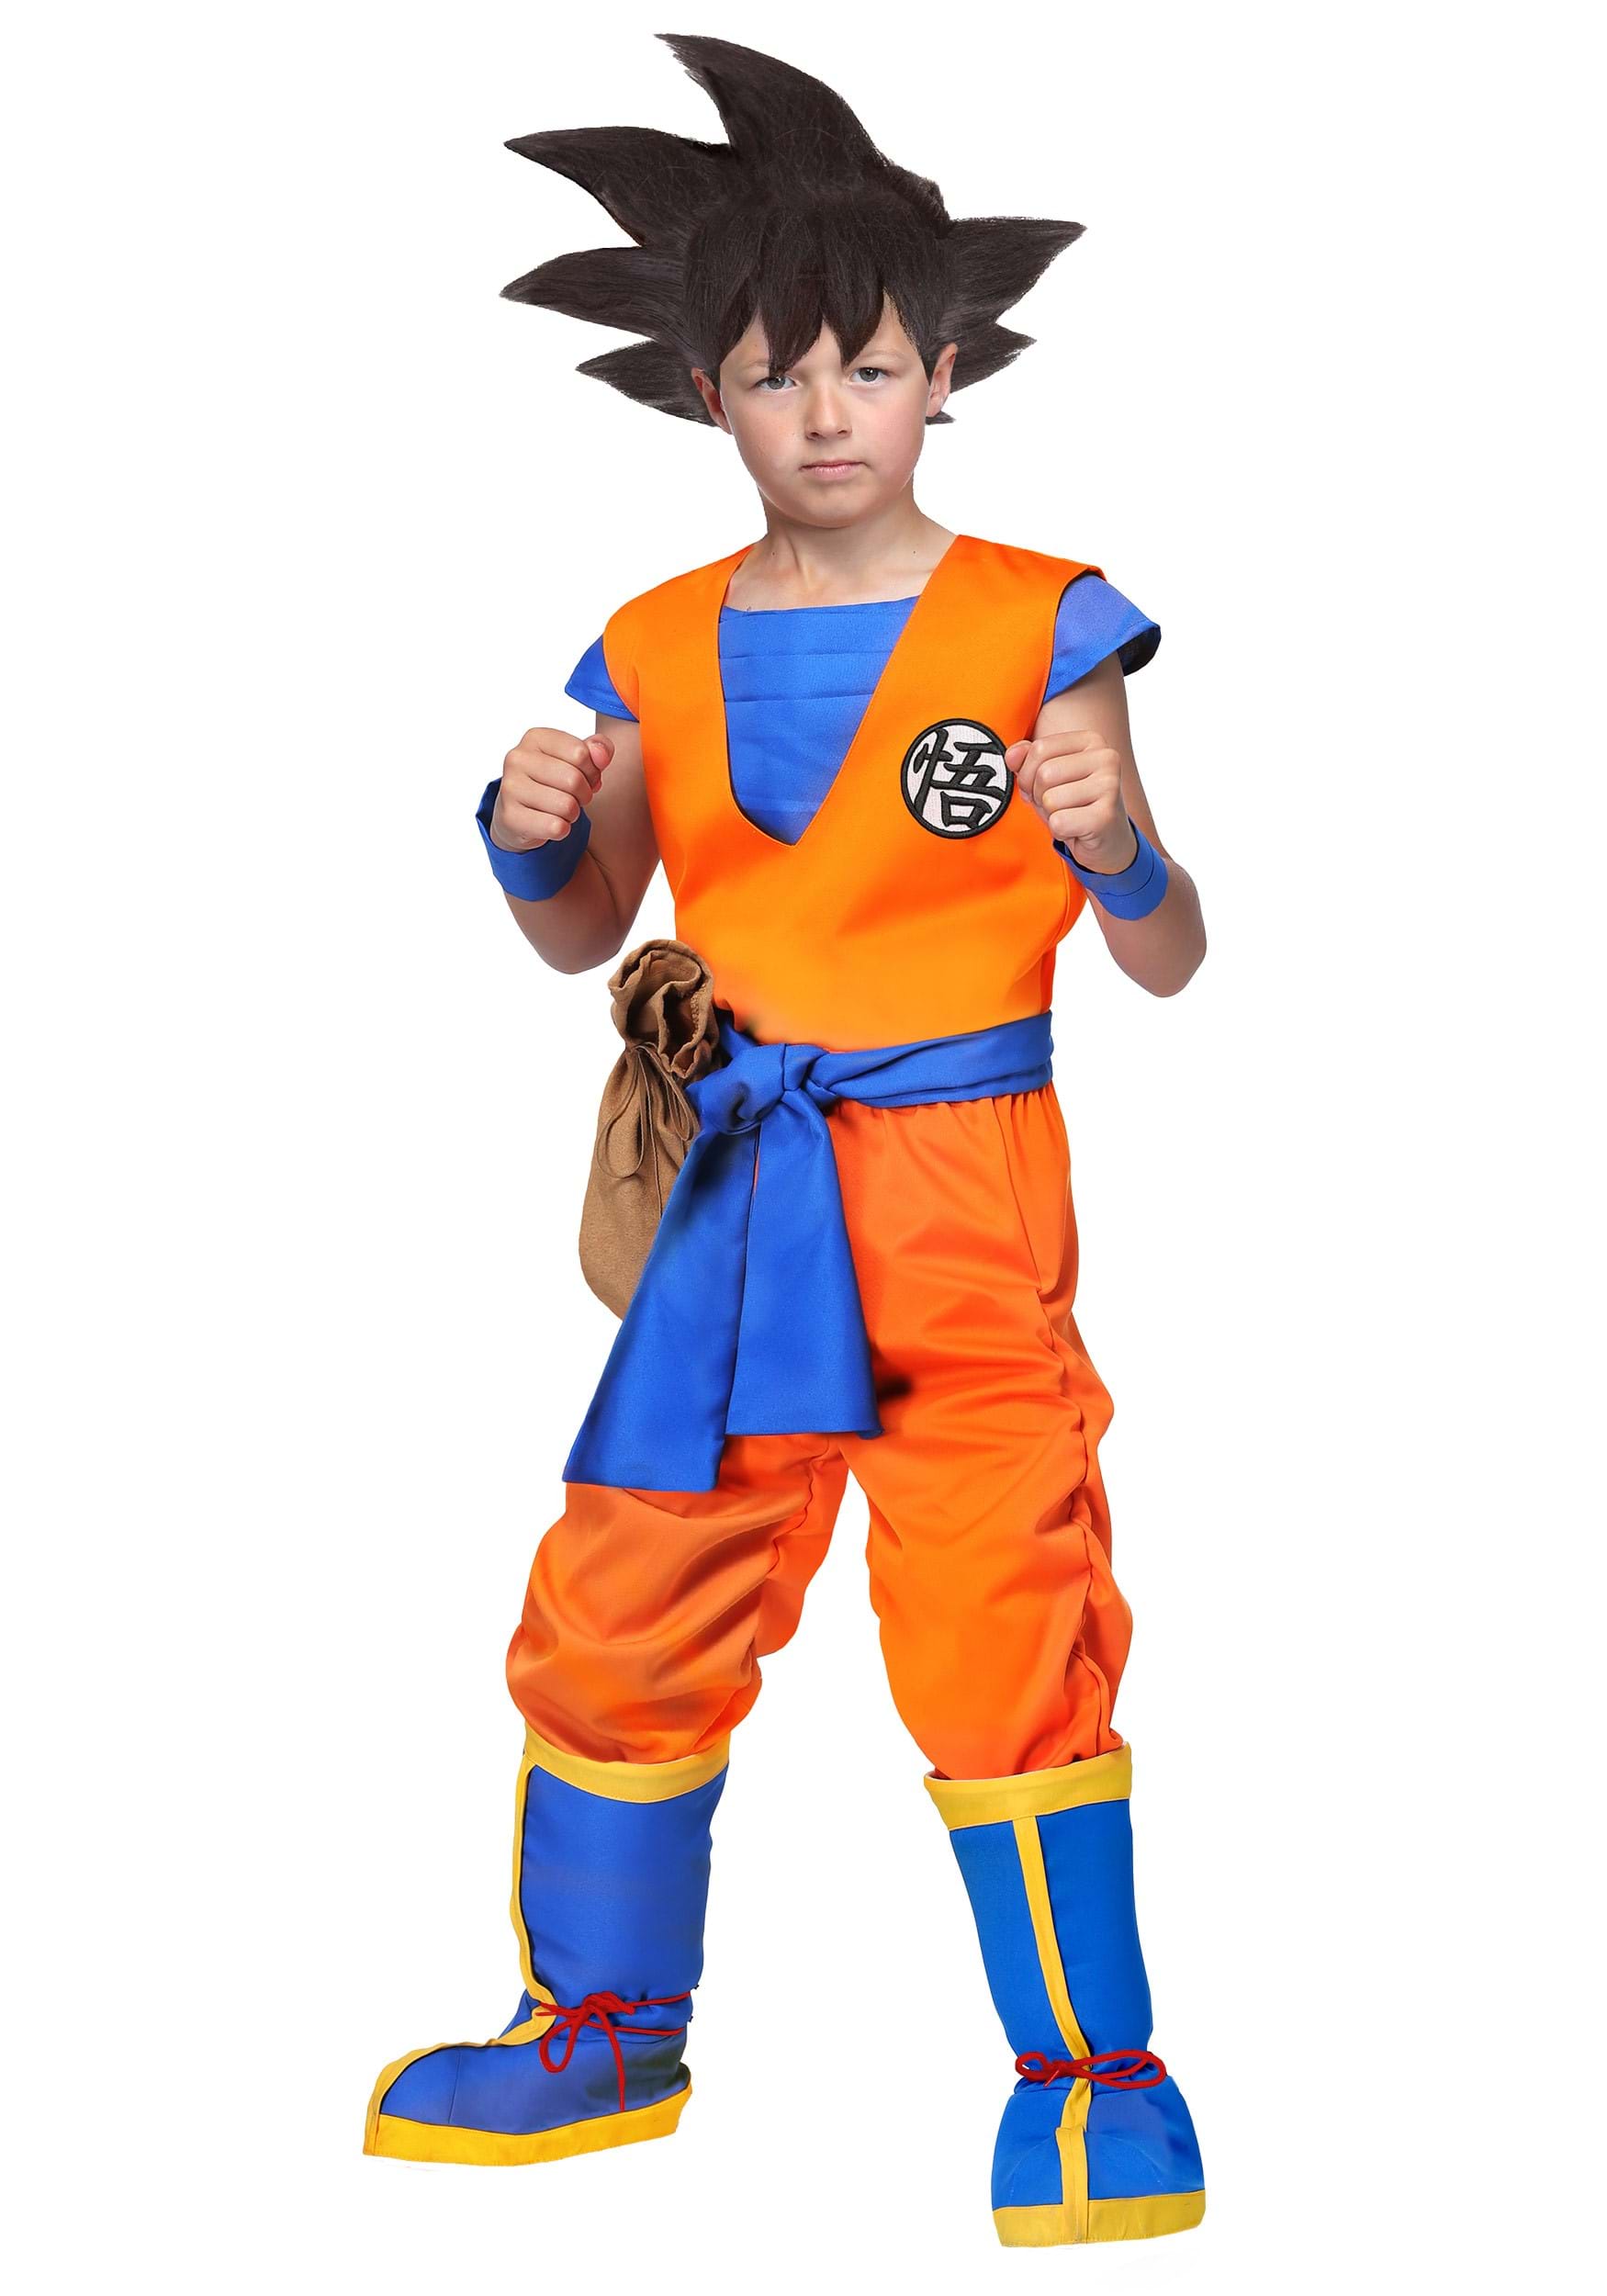 Authentic Dragon Ball Z Goku Costume for Kids